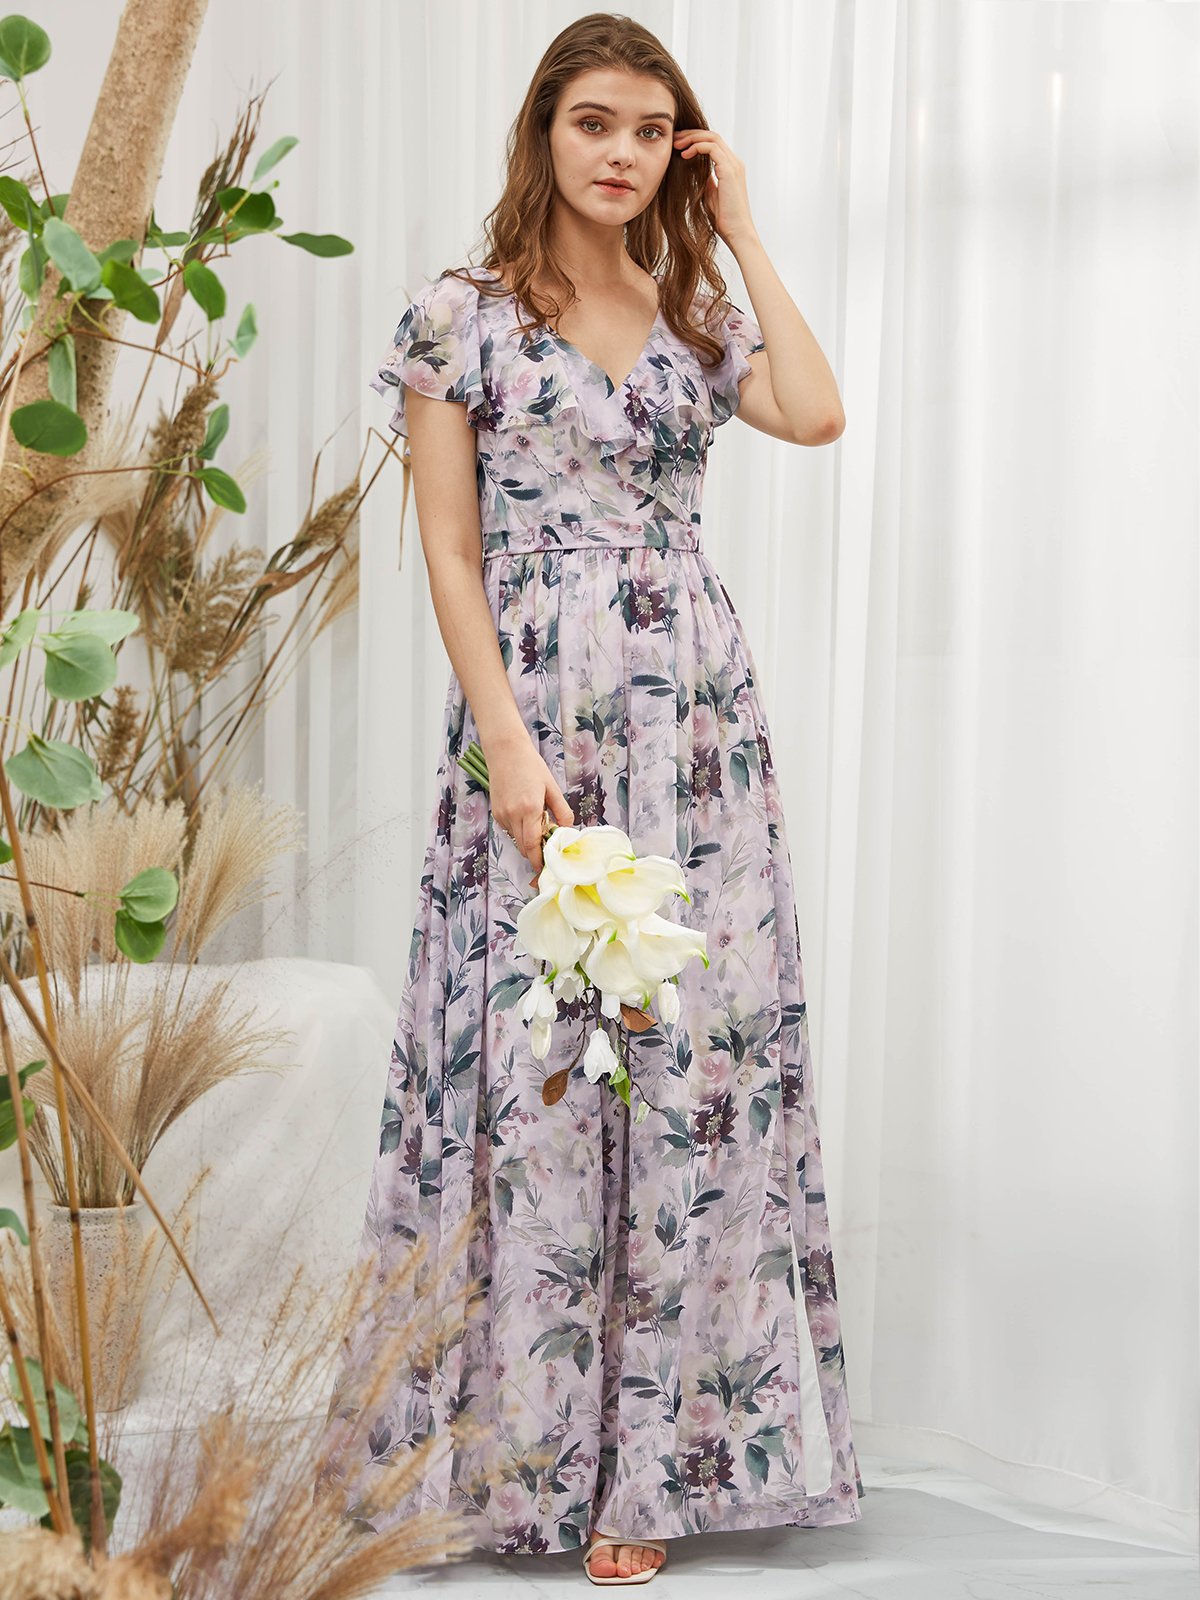 MissJophiel Cap Sleeves V Neck Chiffon Print Floral Wisteria Floor Length Formal Gown